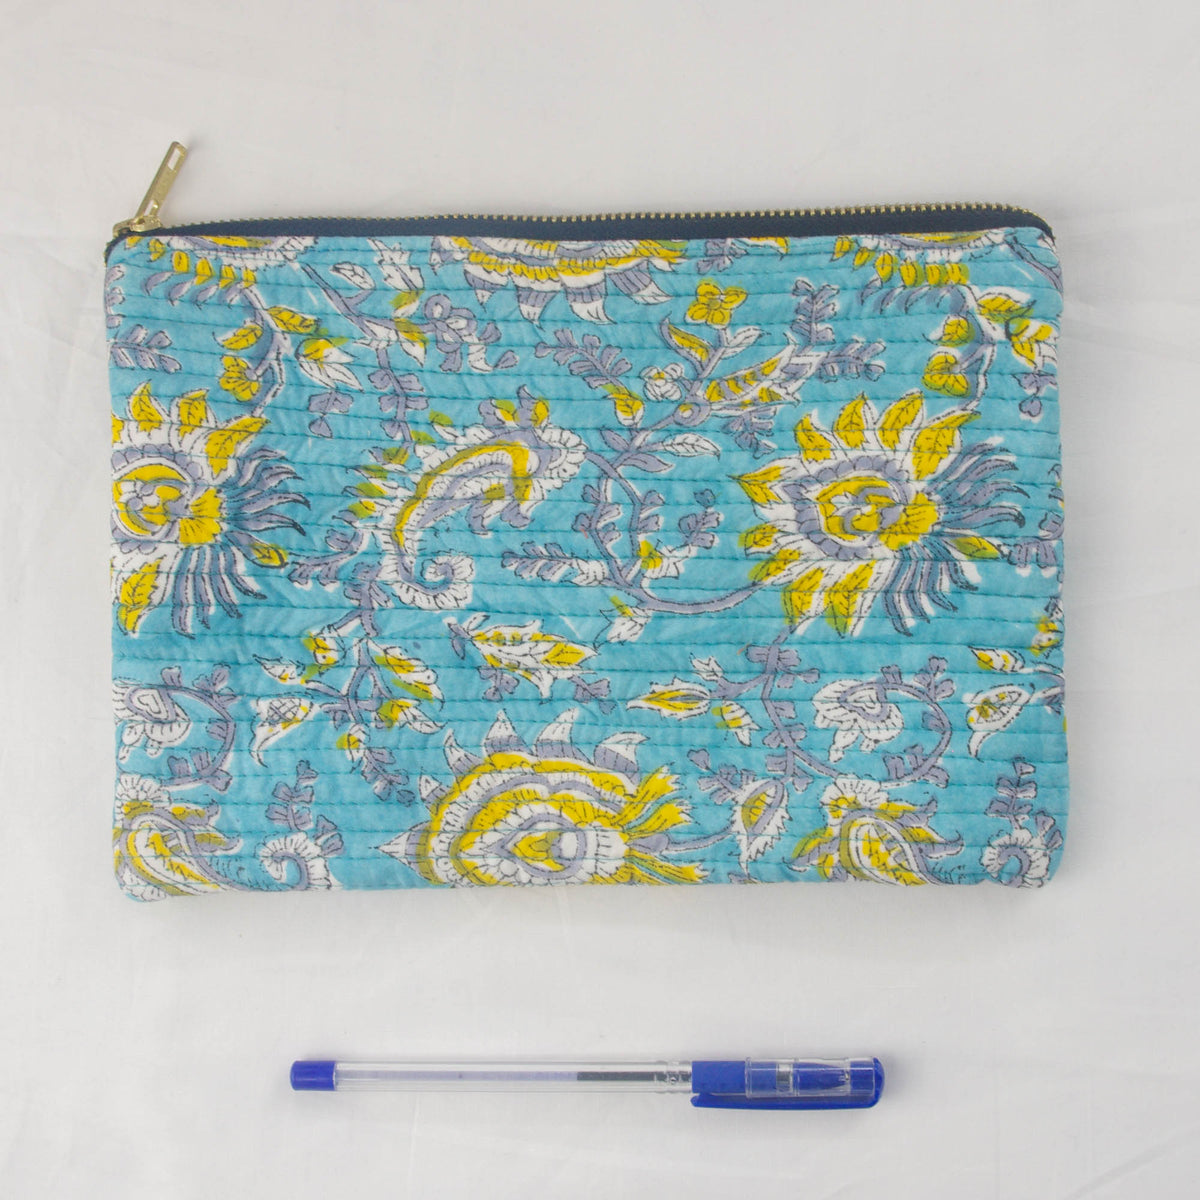 Block Print Makeup Pouch or Pencil Case- Blue Yellow Paisley